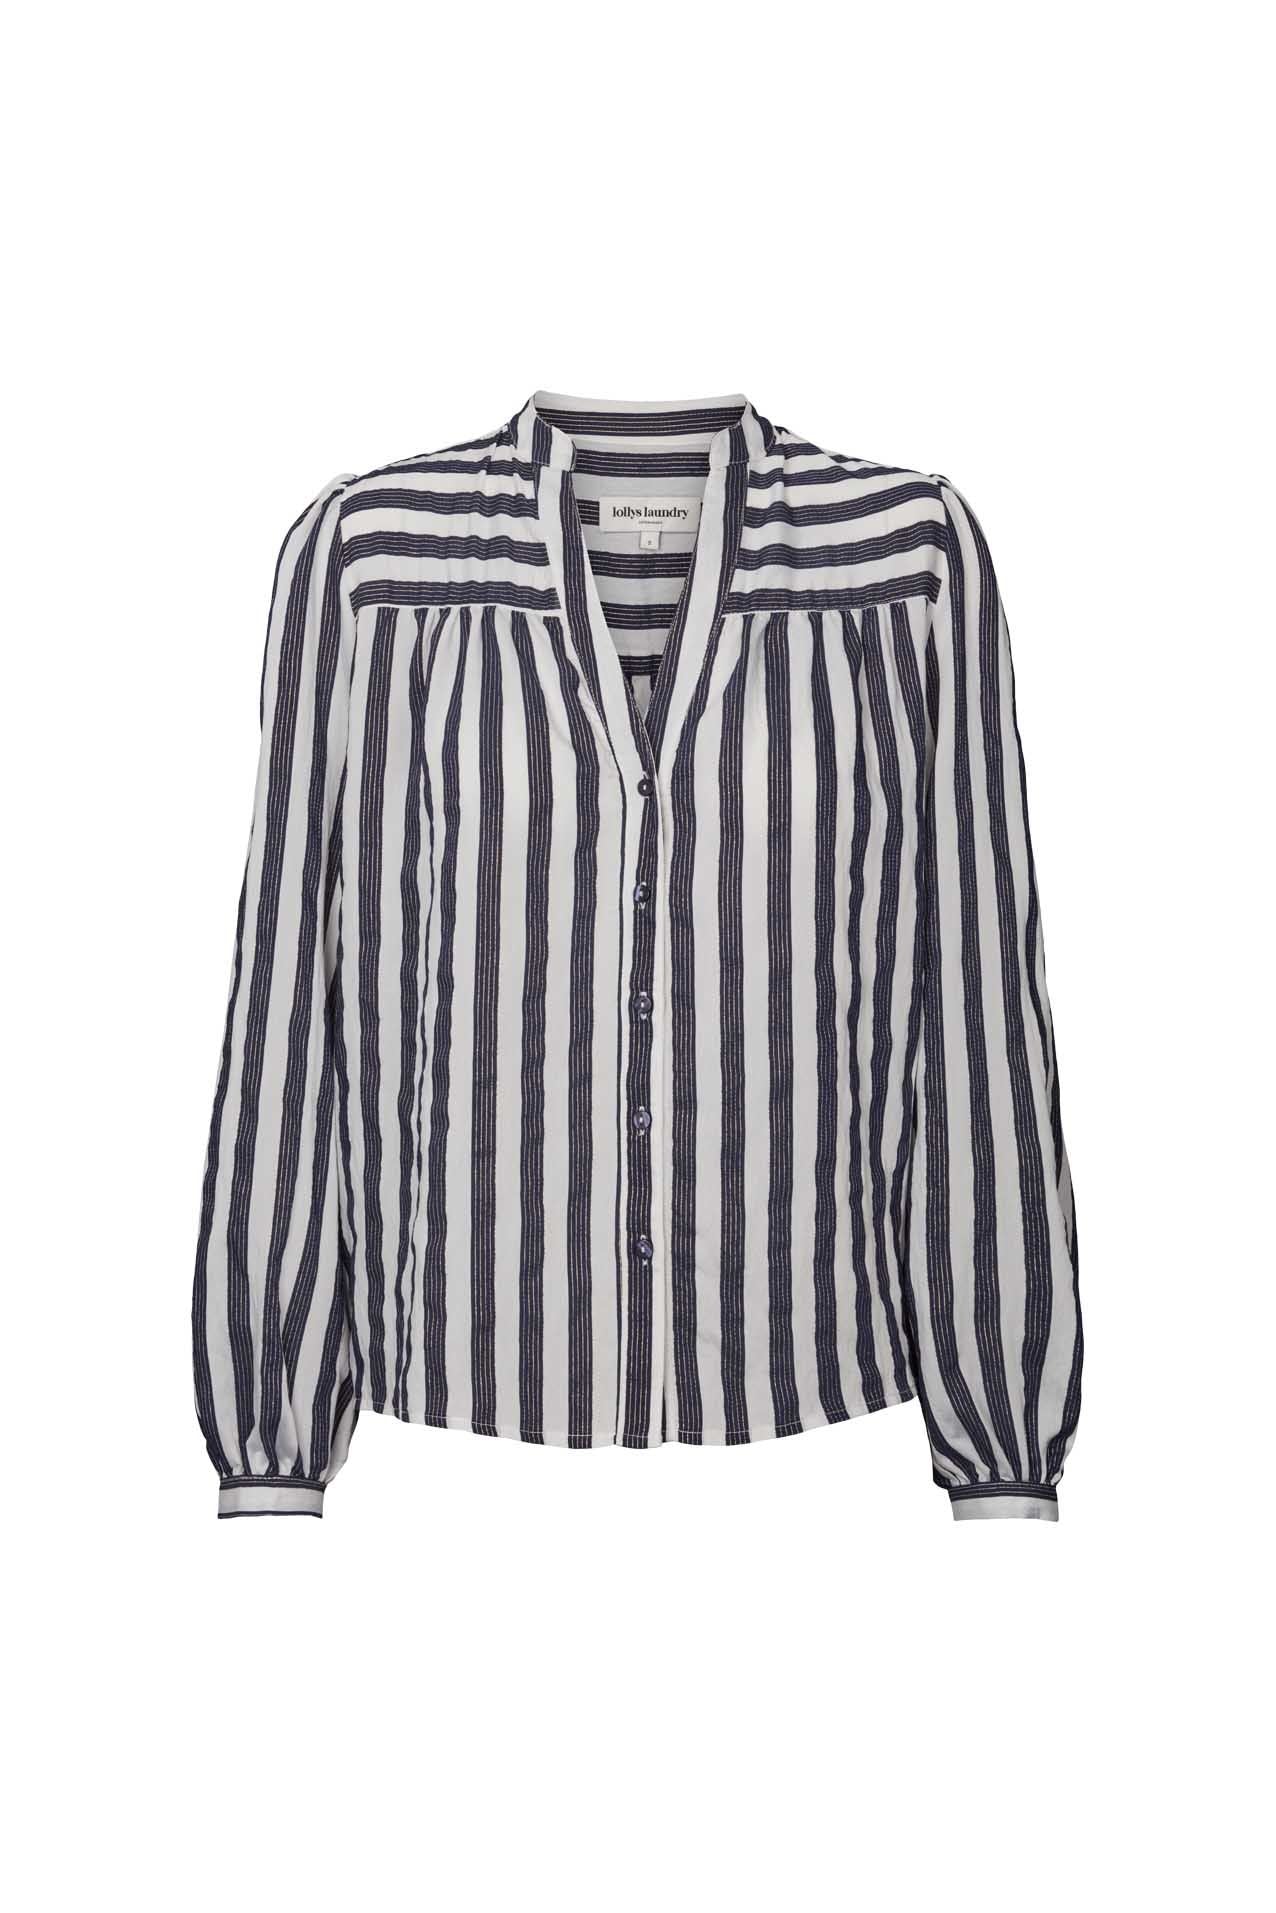 Lollys Laundry - Elif Stripe Shirt